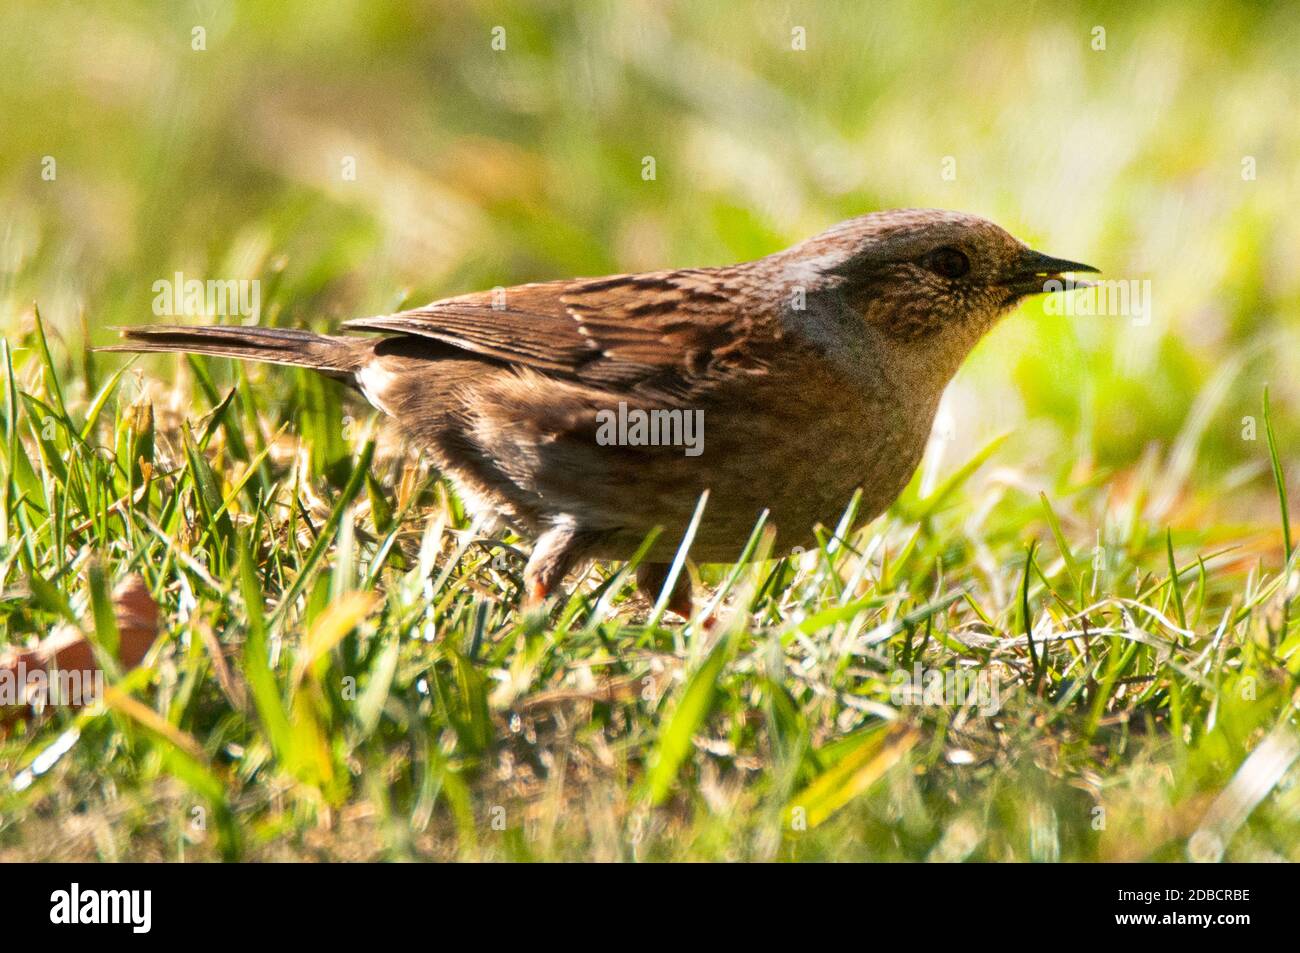 Hedge Sparrow / Dunnock / Prunella modularis Stock Photo